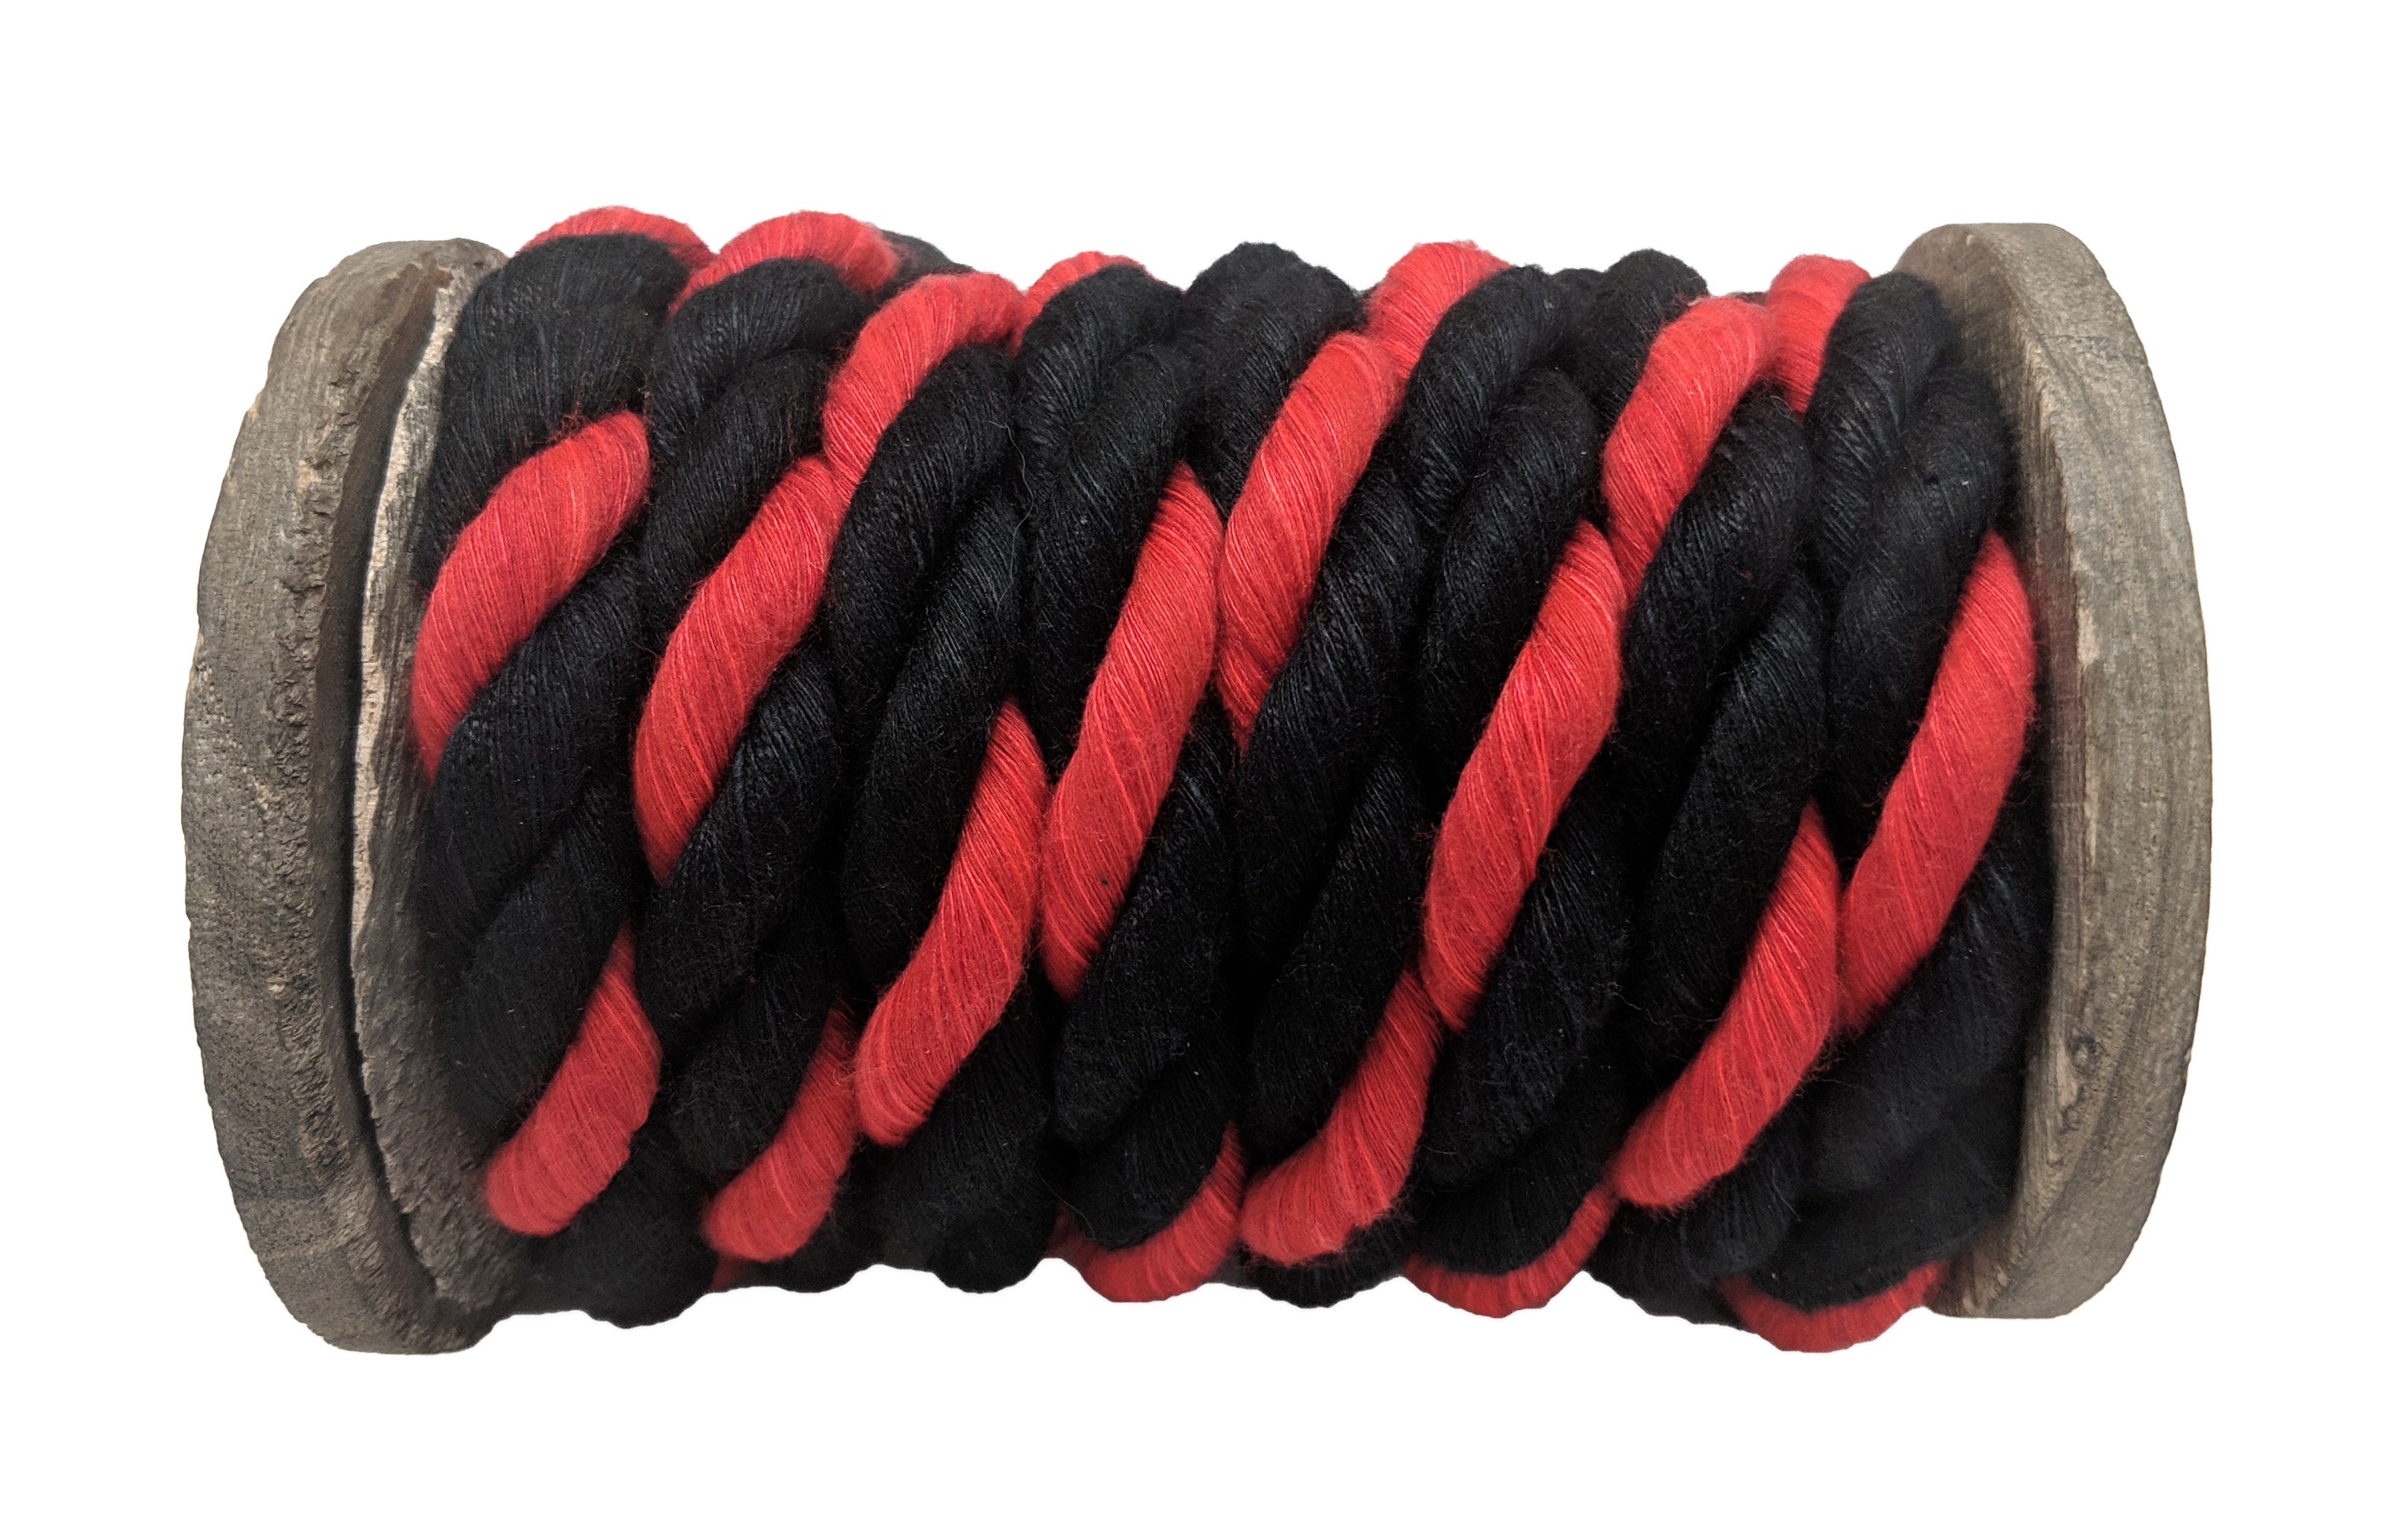 Ravenox Twisted Cotton Rope (Black, Black & Red) - Thin Red Line - 1/2-Inch x 10-Feet - 15845456511066